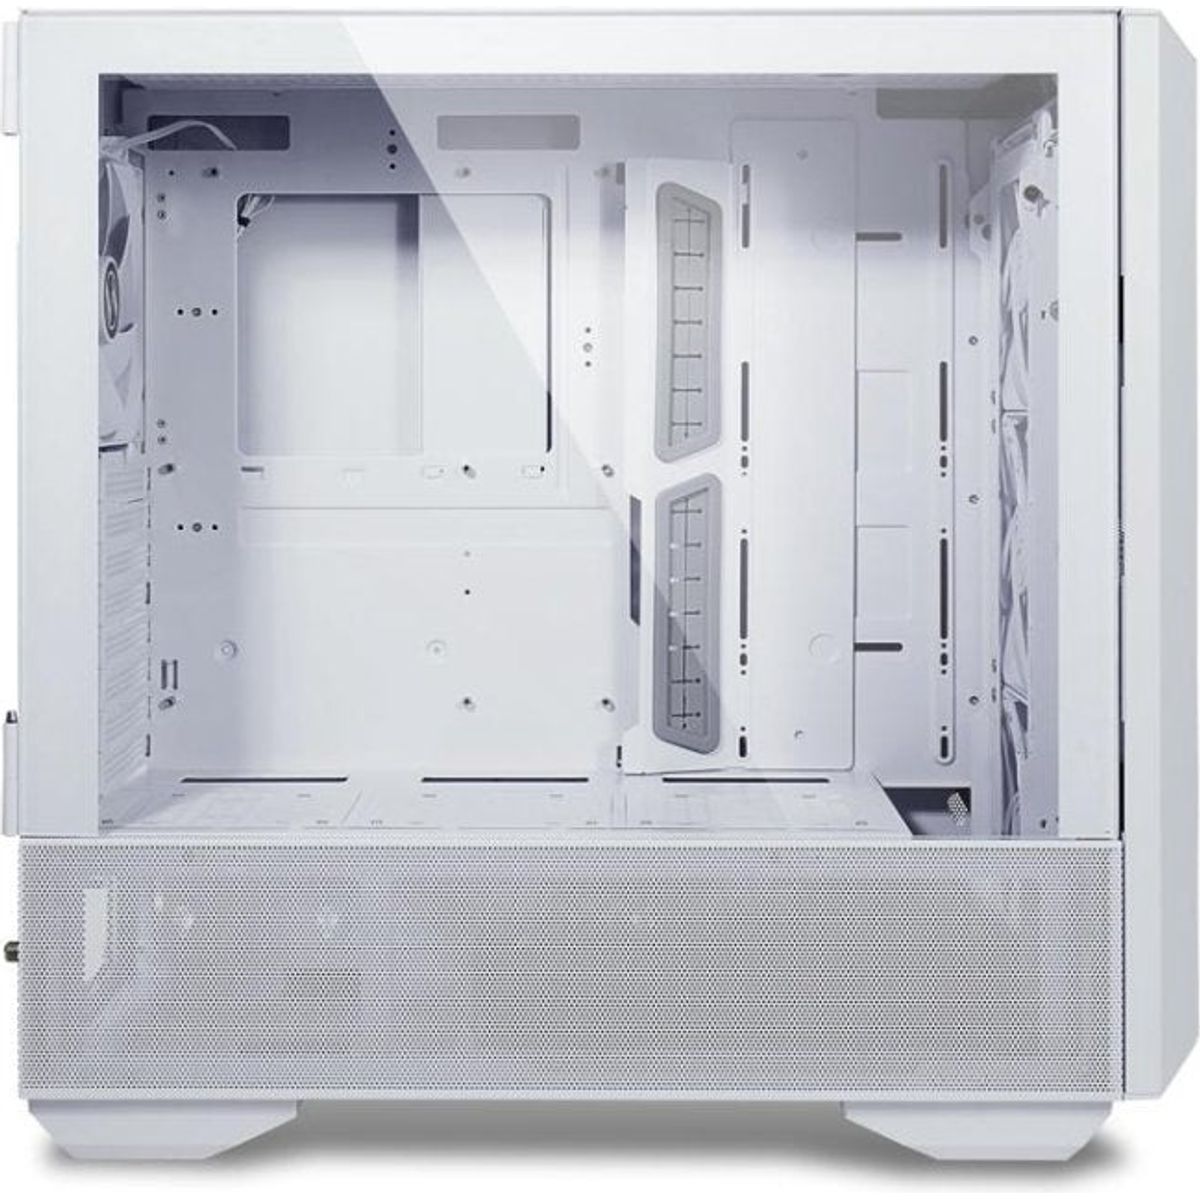 LIAN LI Lancool III WHITE Mid Tower ATX Computer Case - Desktop Computer & Server Cases - Gamertech.shop